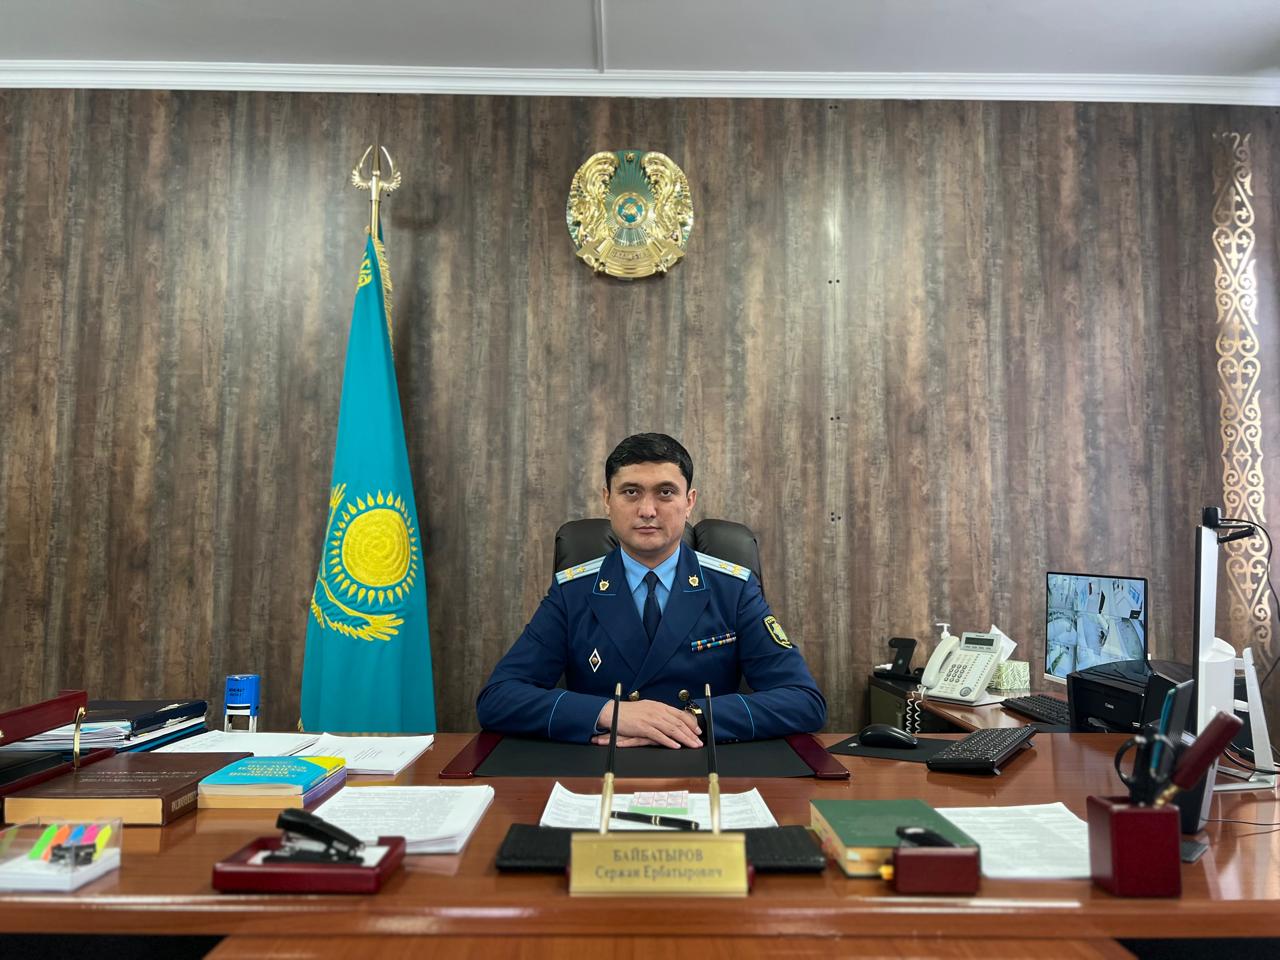 Baybatyrov Sergeant Yerbatyrovich